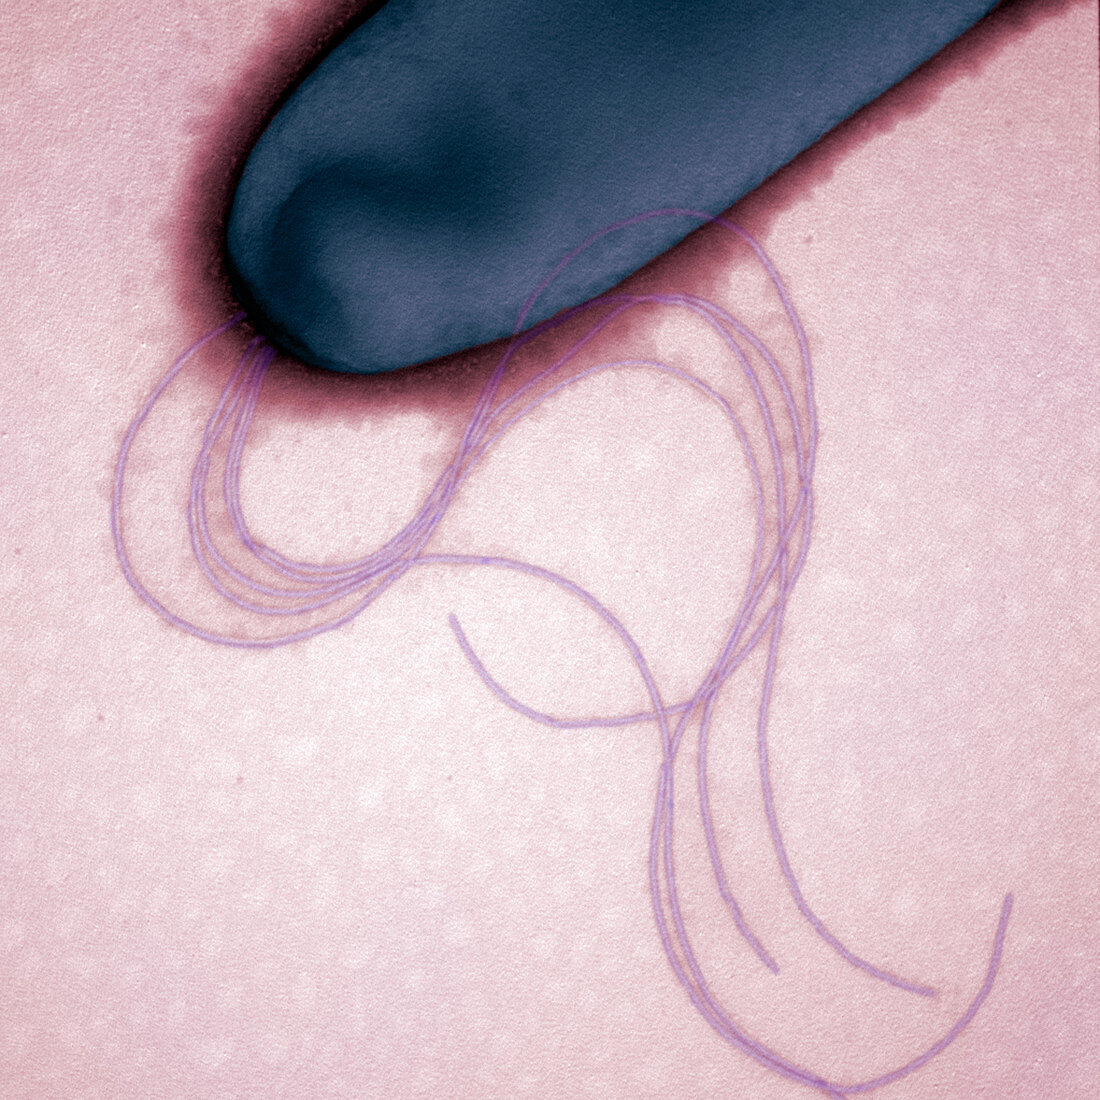 Flagella of Pseudomonas aeruginosa